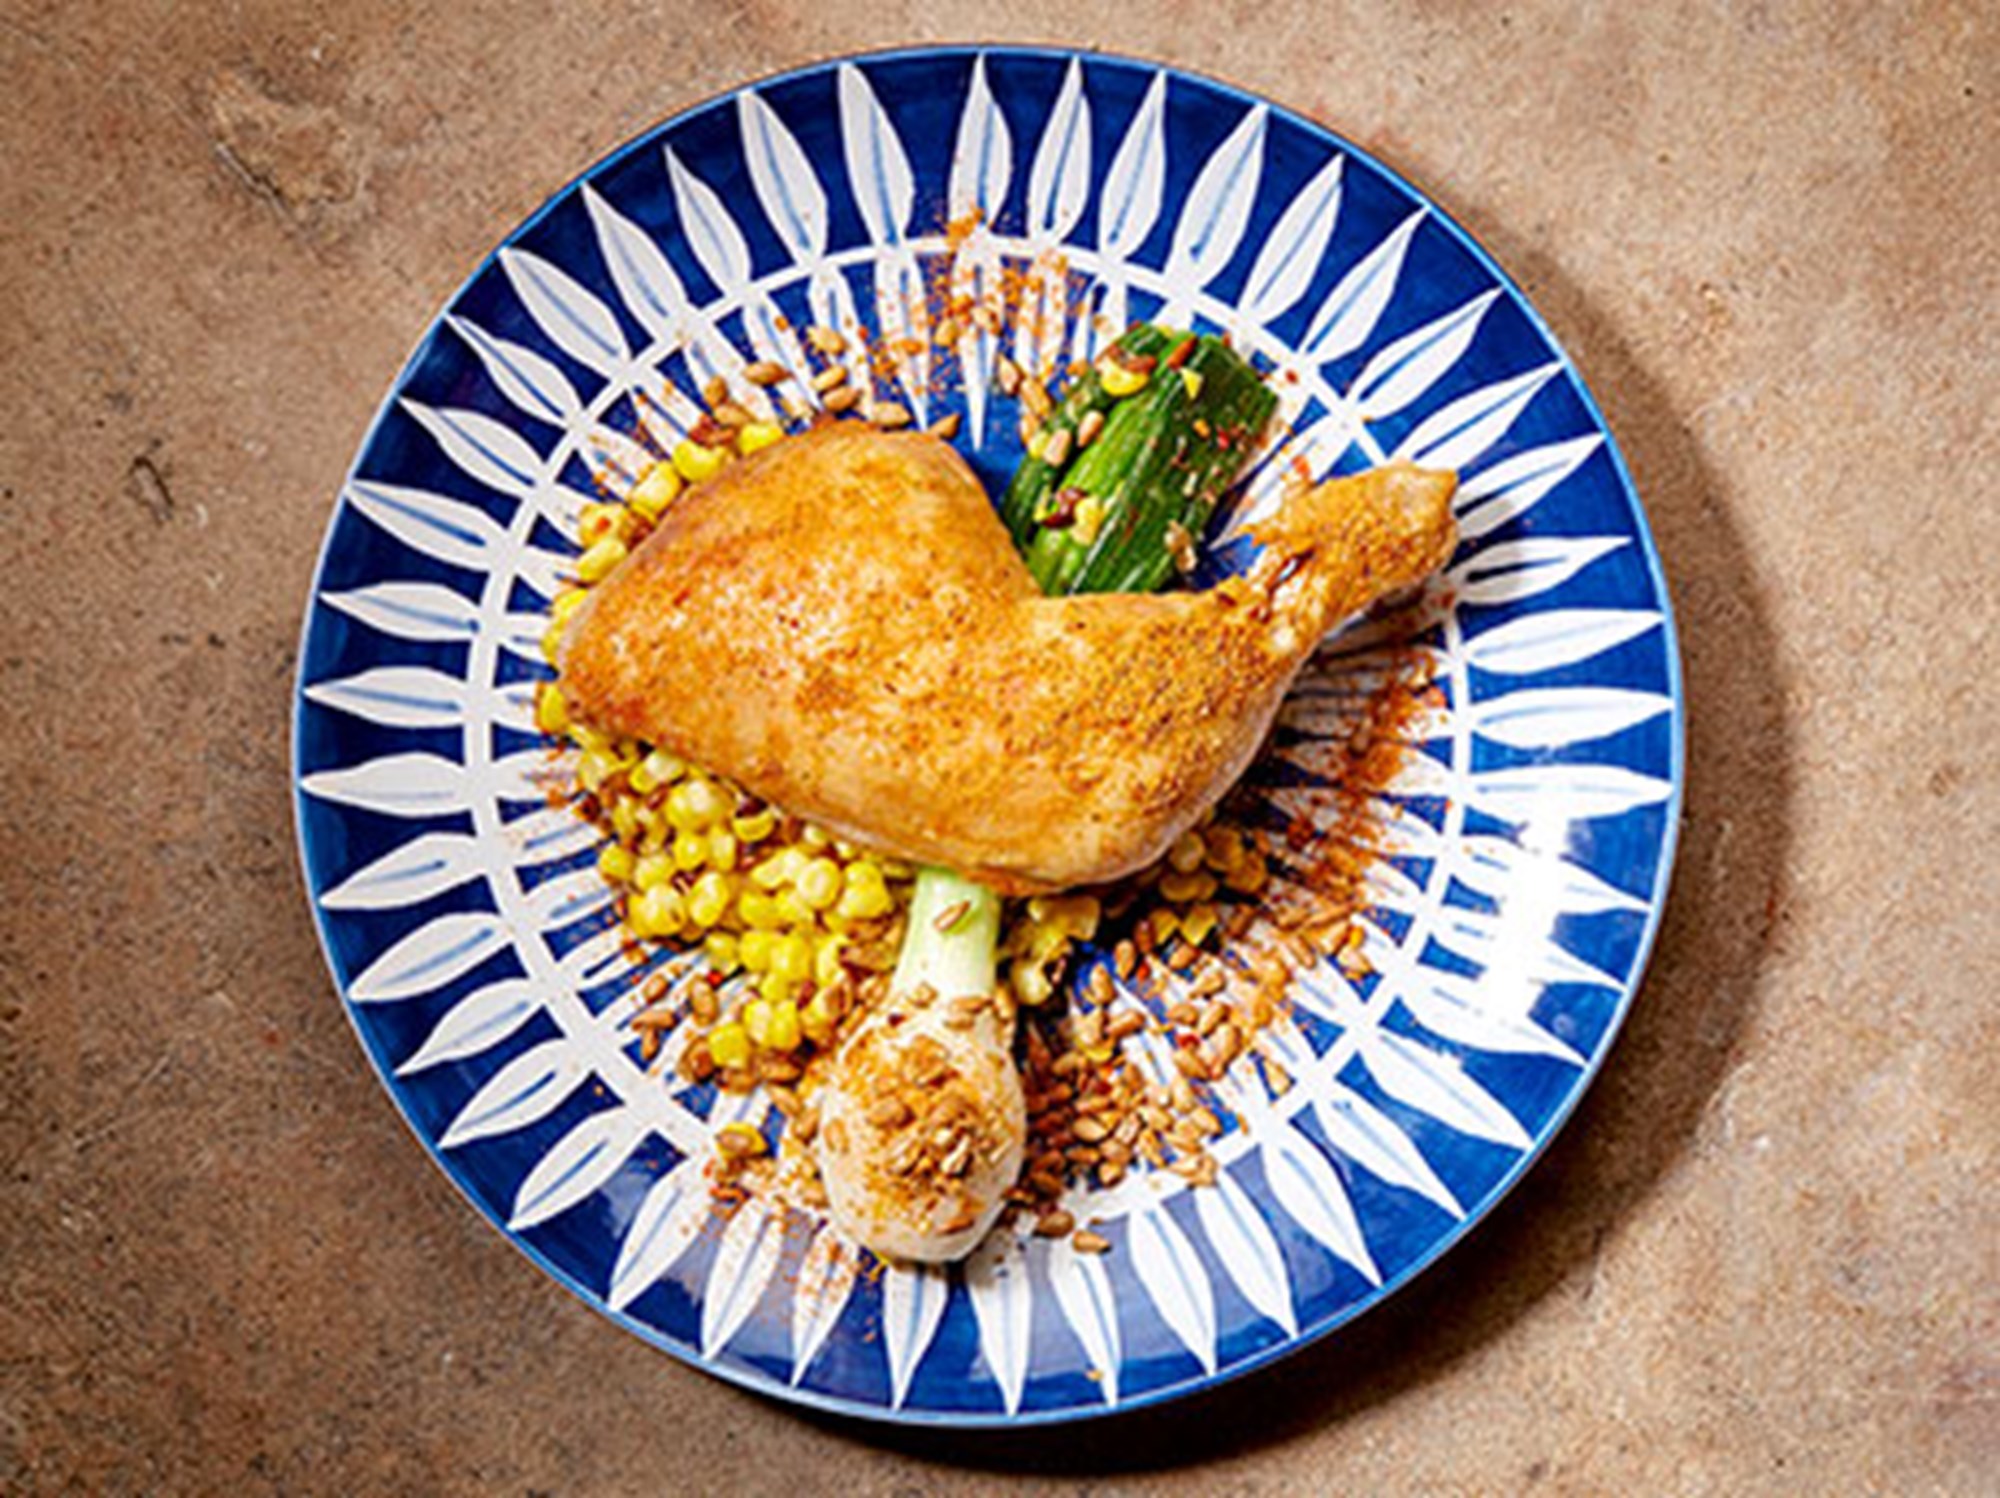 Fajita kyllingelår med majs, forårsløg og knuste kartofler med solsikkekerner